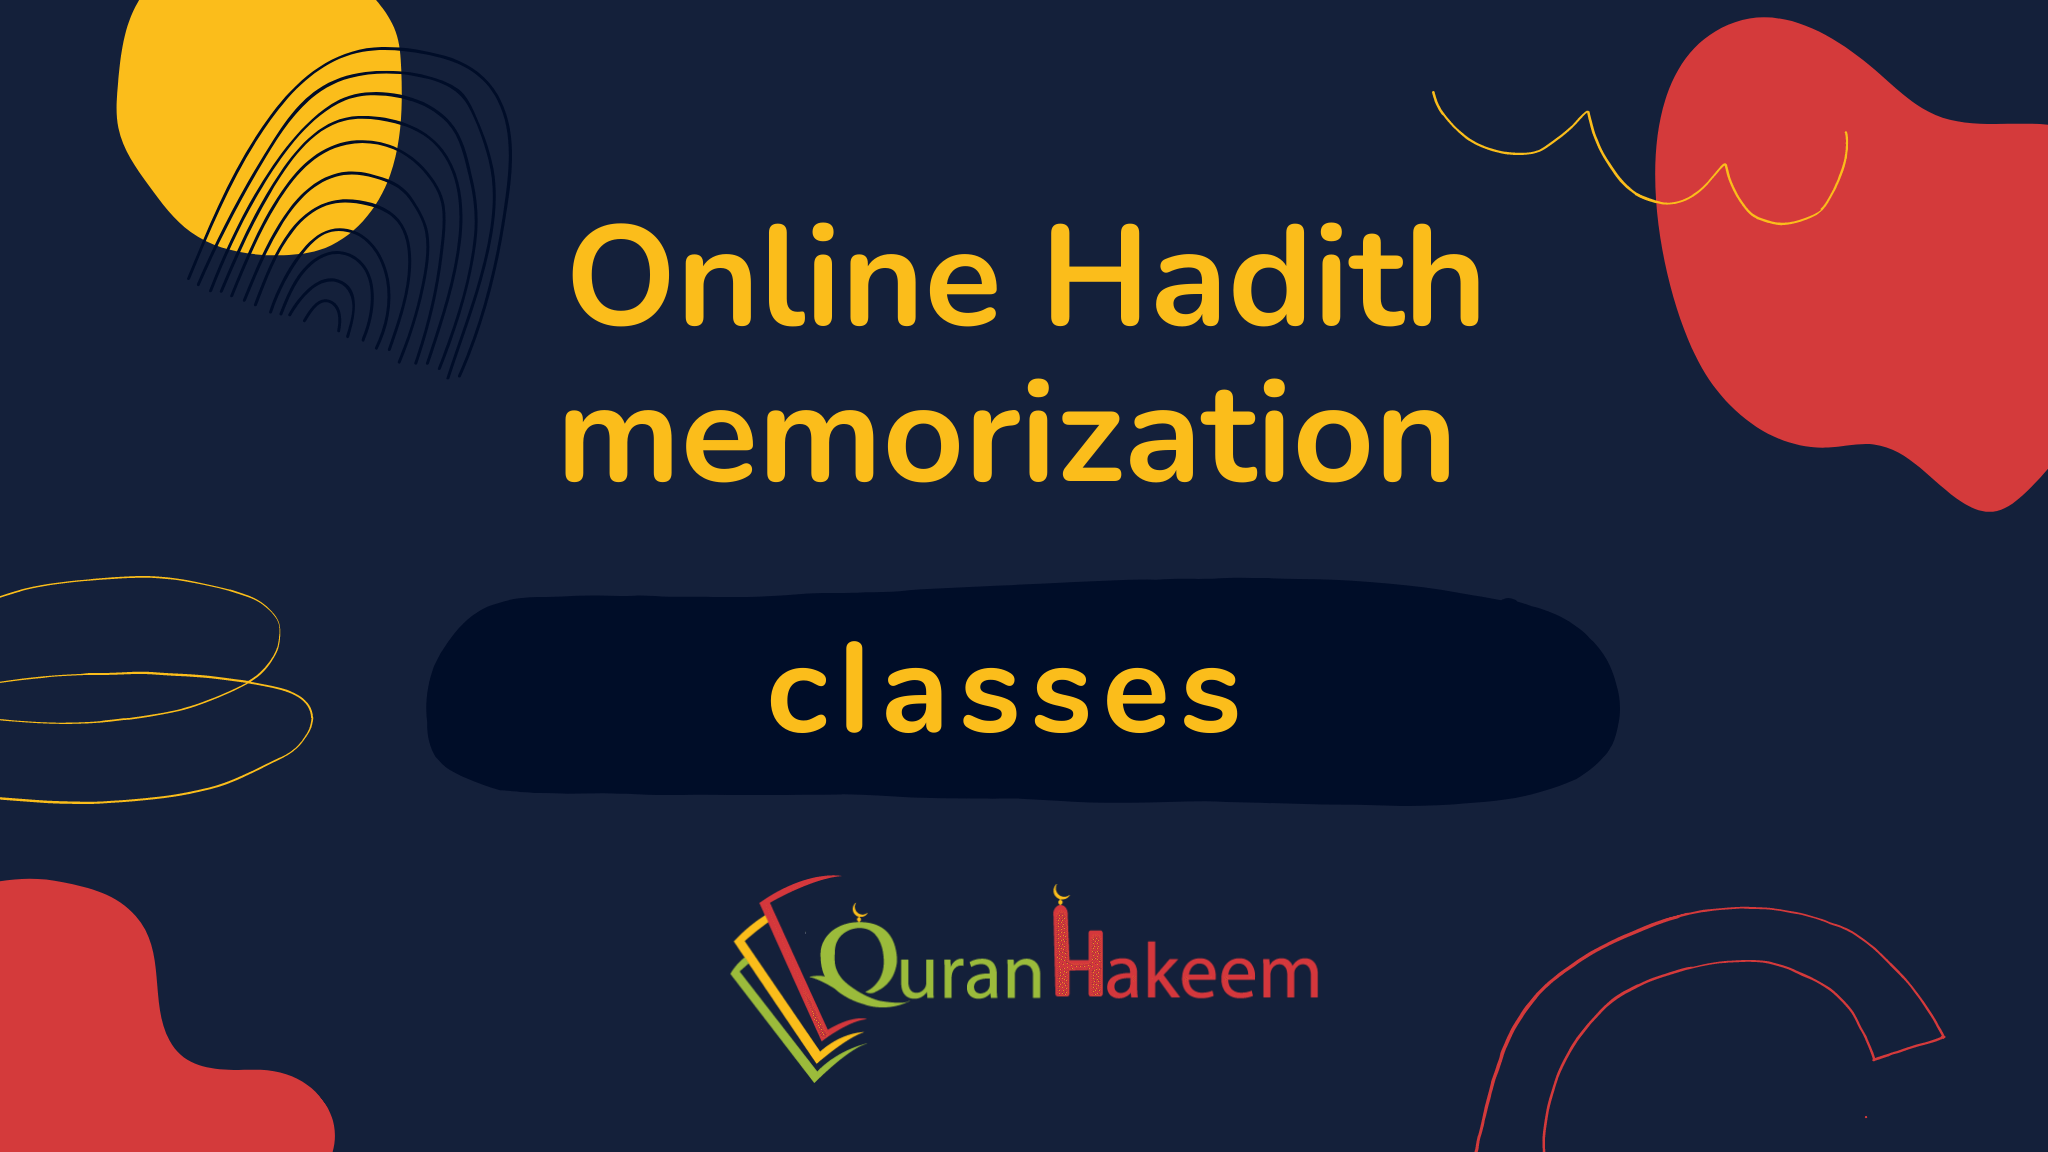 Hadith memorization classes